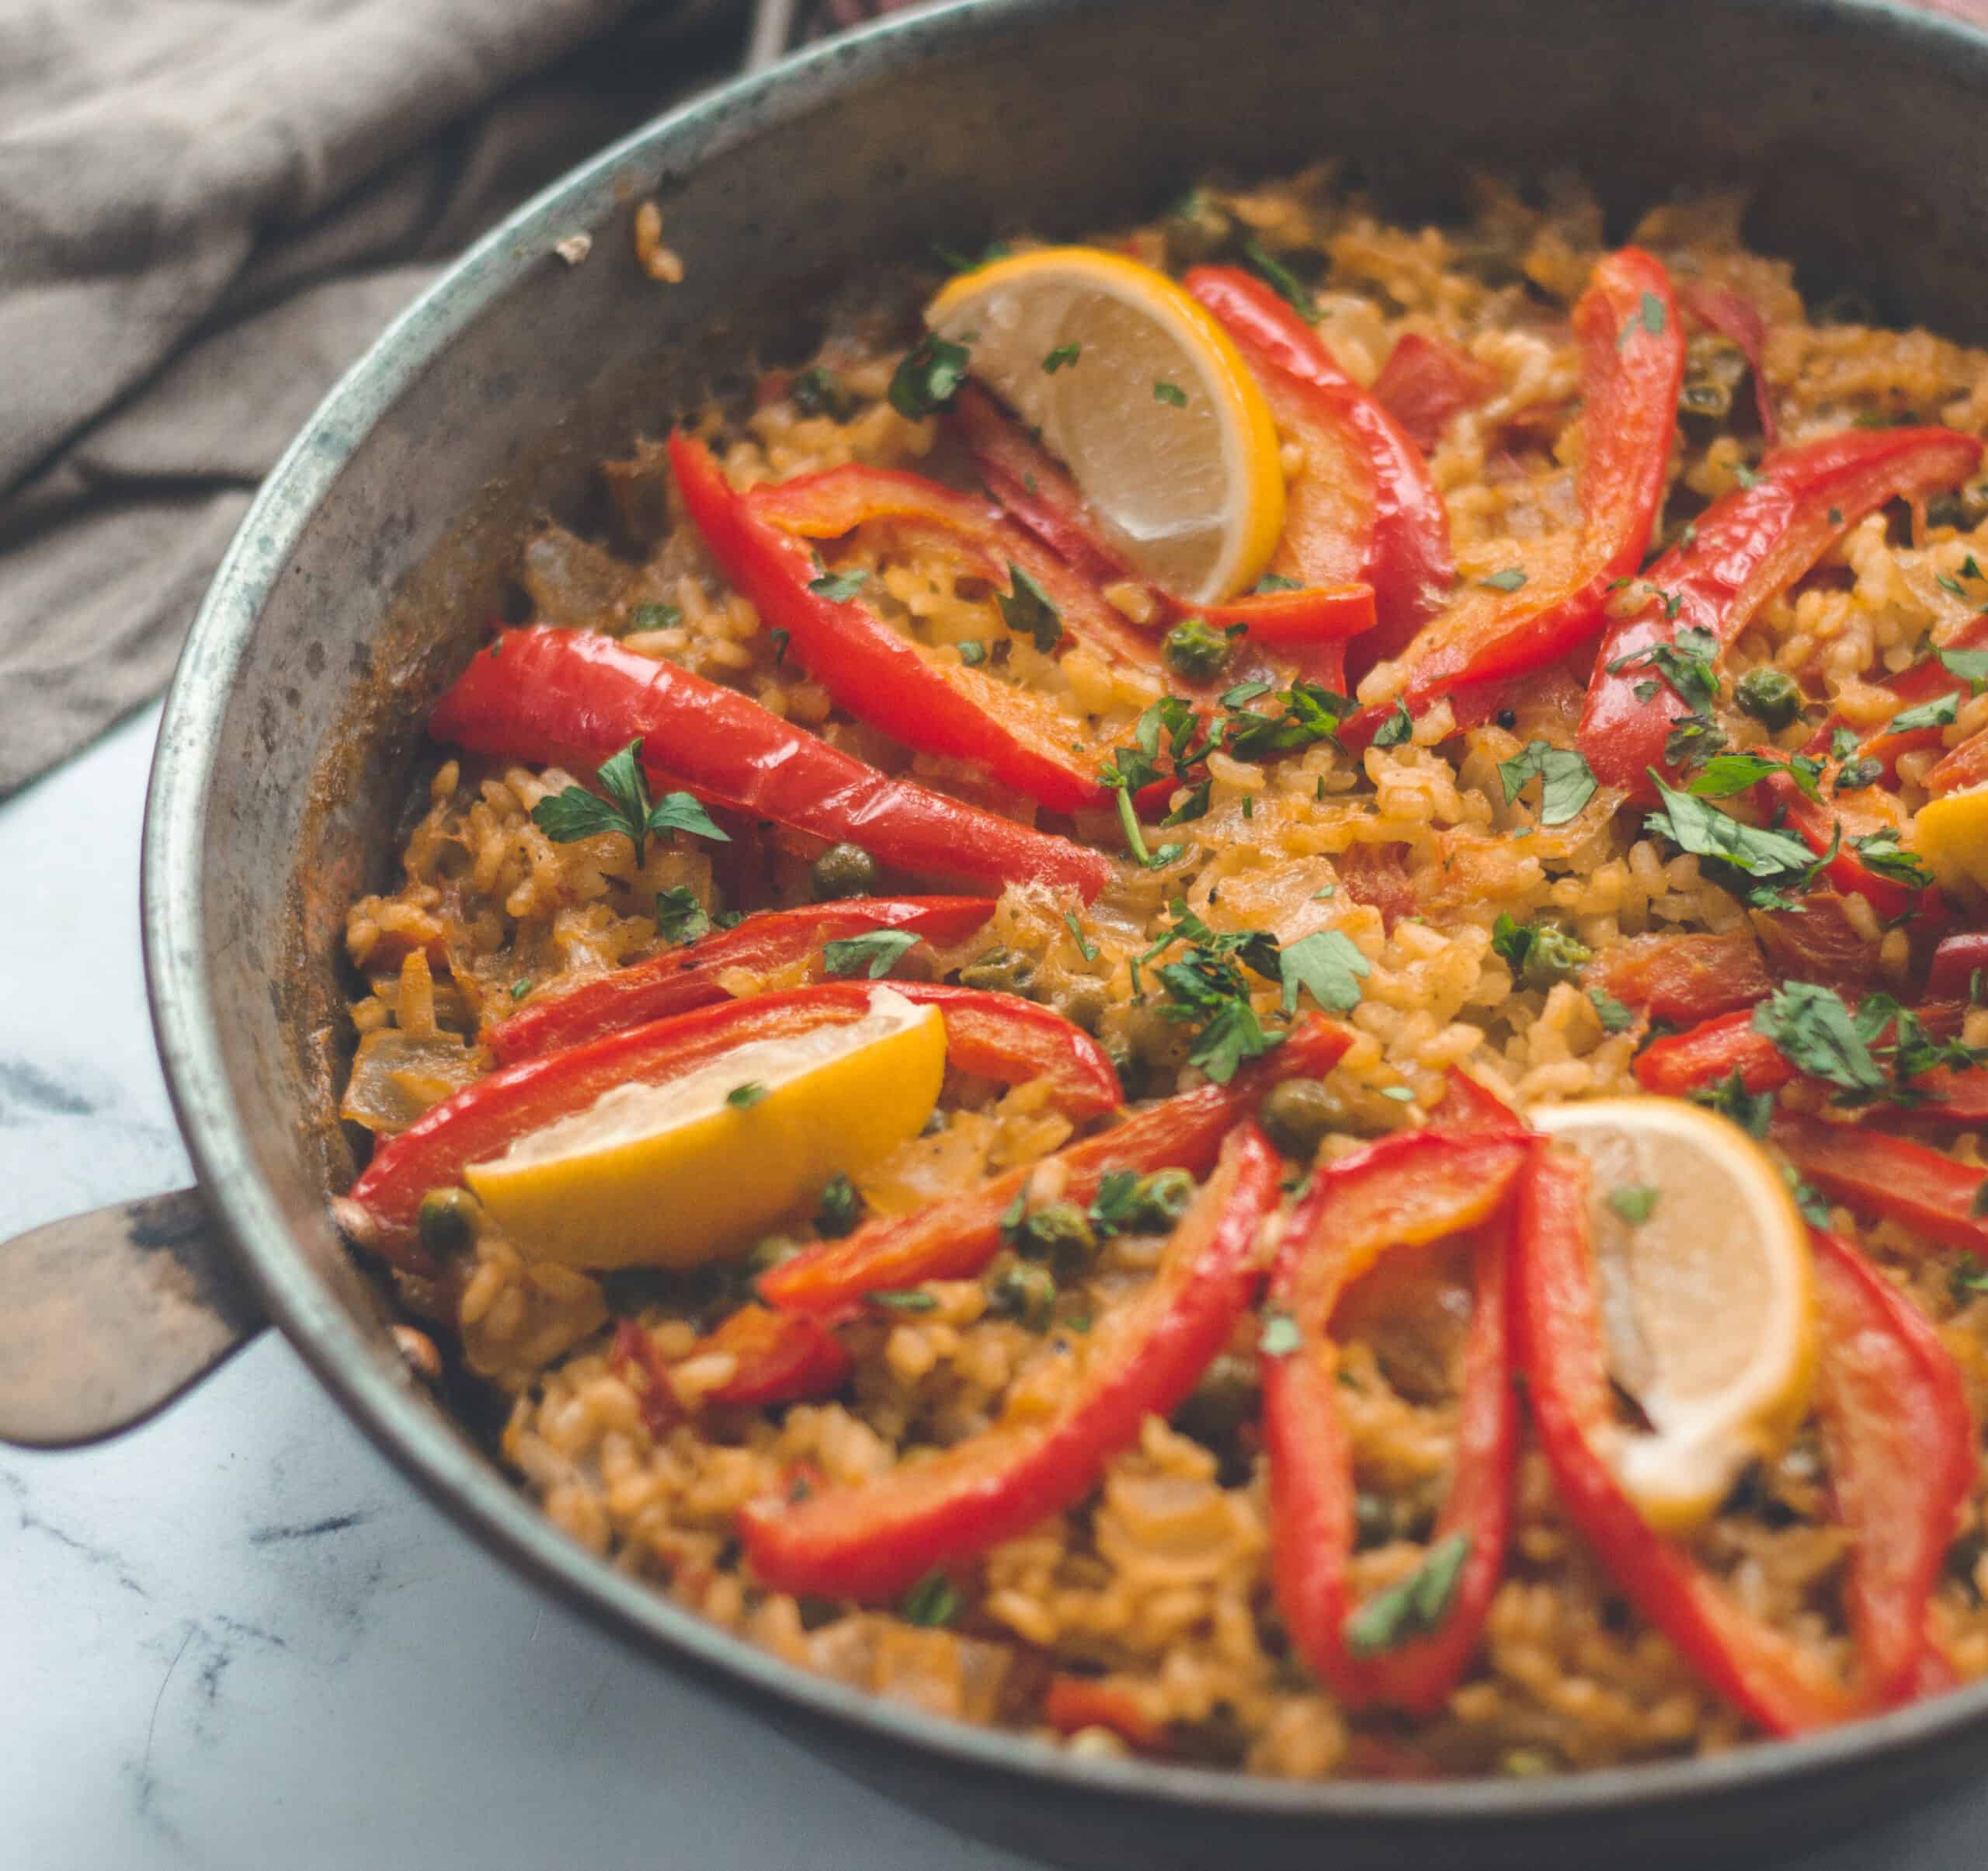 A simple and easy vegan paella recipe